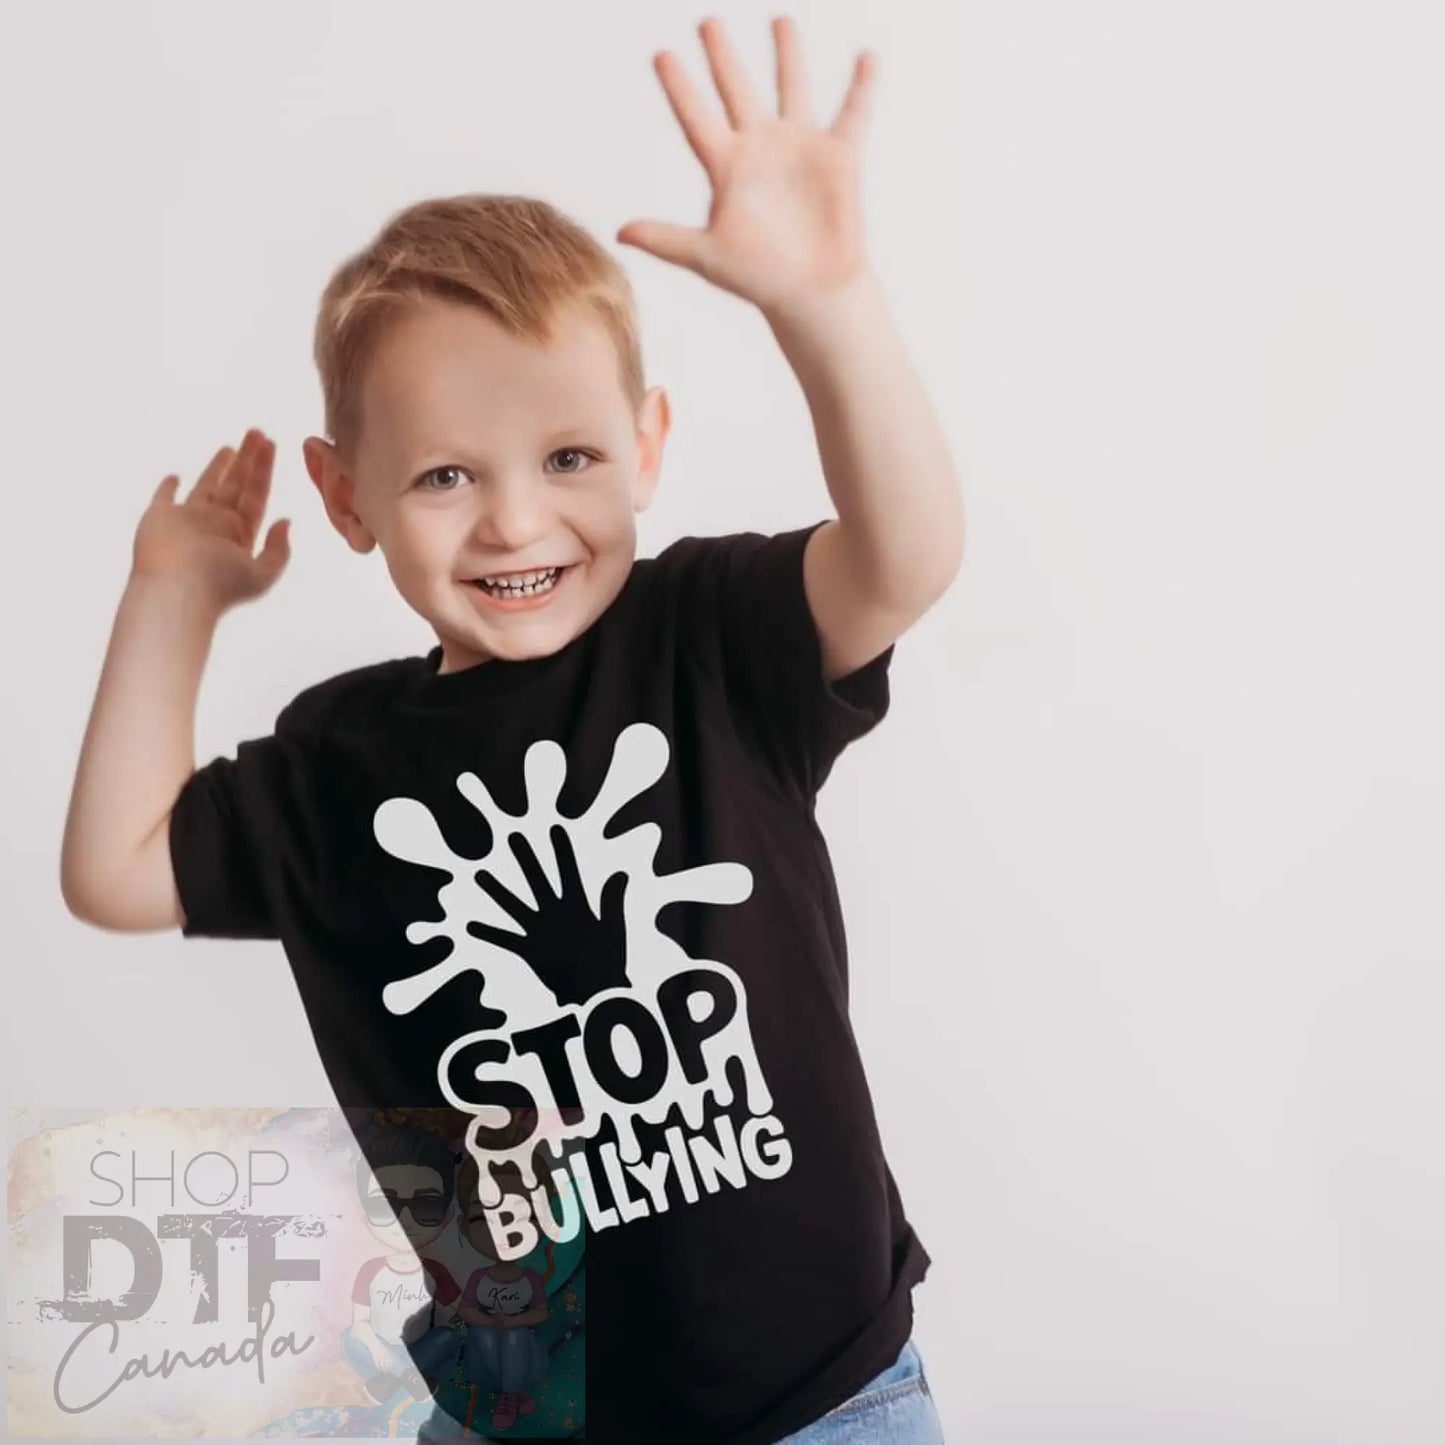 Kids - Stop bullying - Shirts & Tops